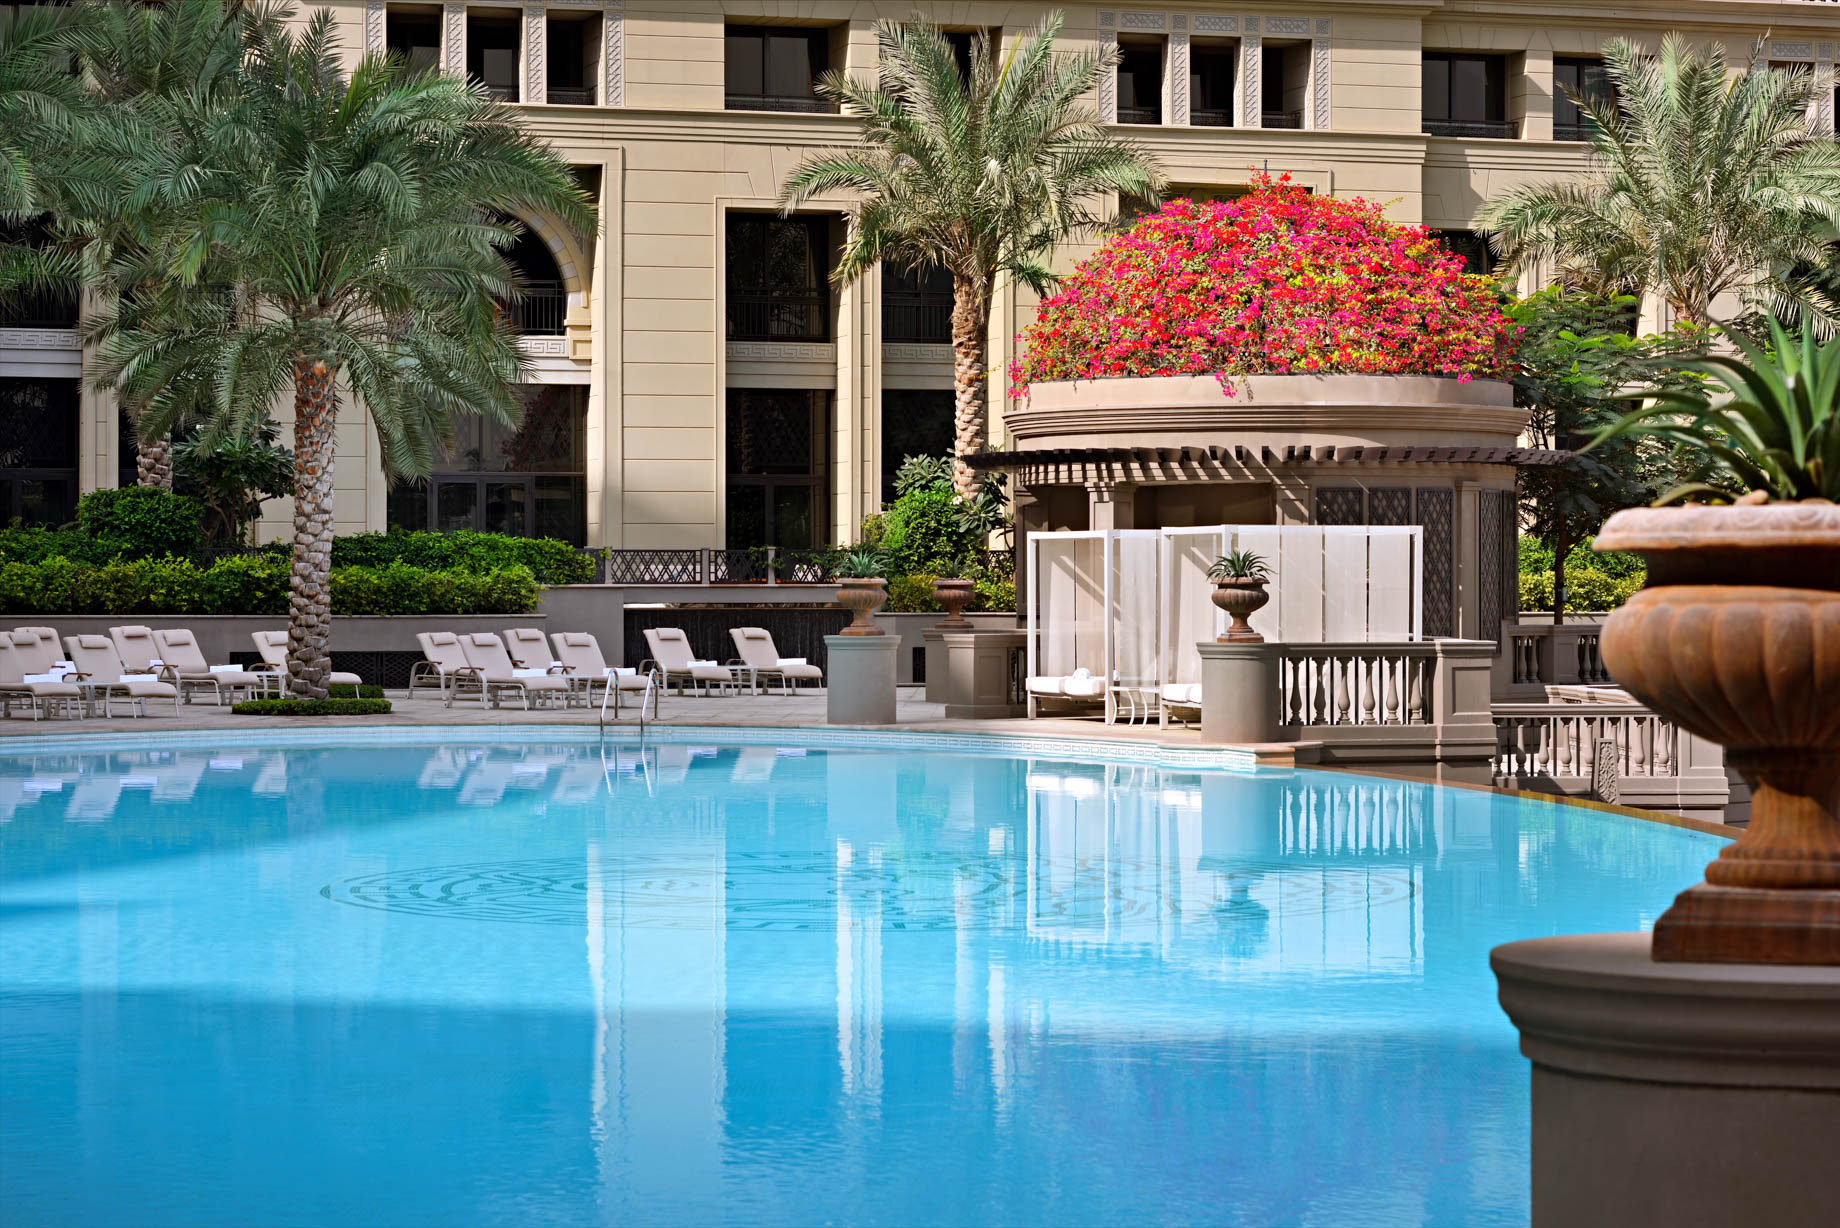 Palazzo Versace Dubai Hotel – Jaddaf Waterfront, Dubai, UAE – Central Pool Deck